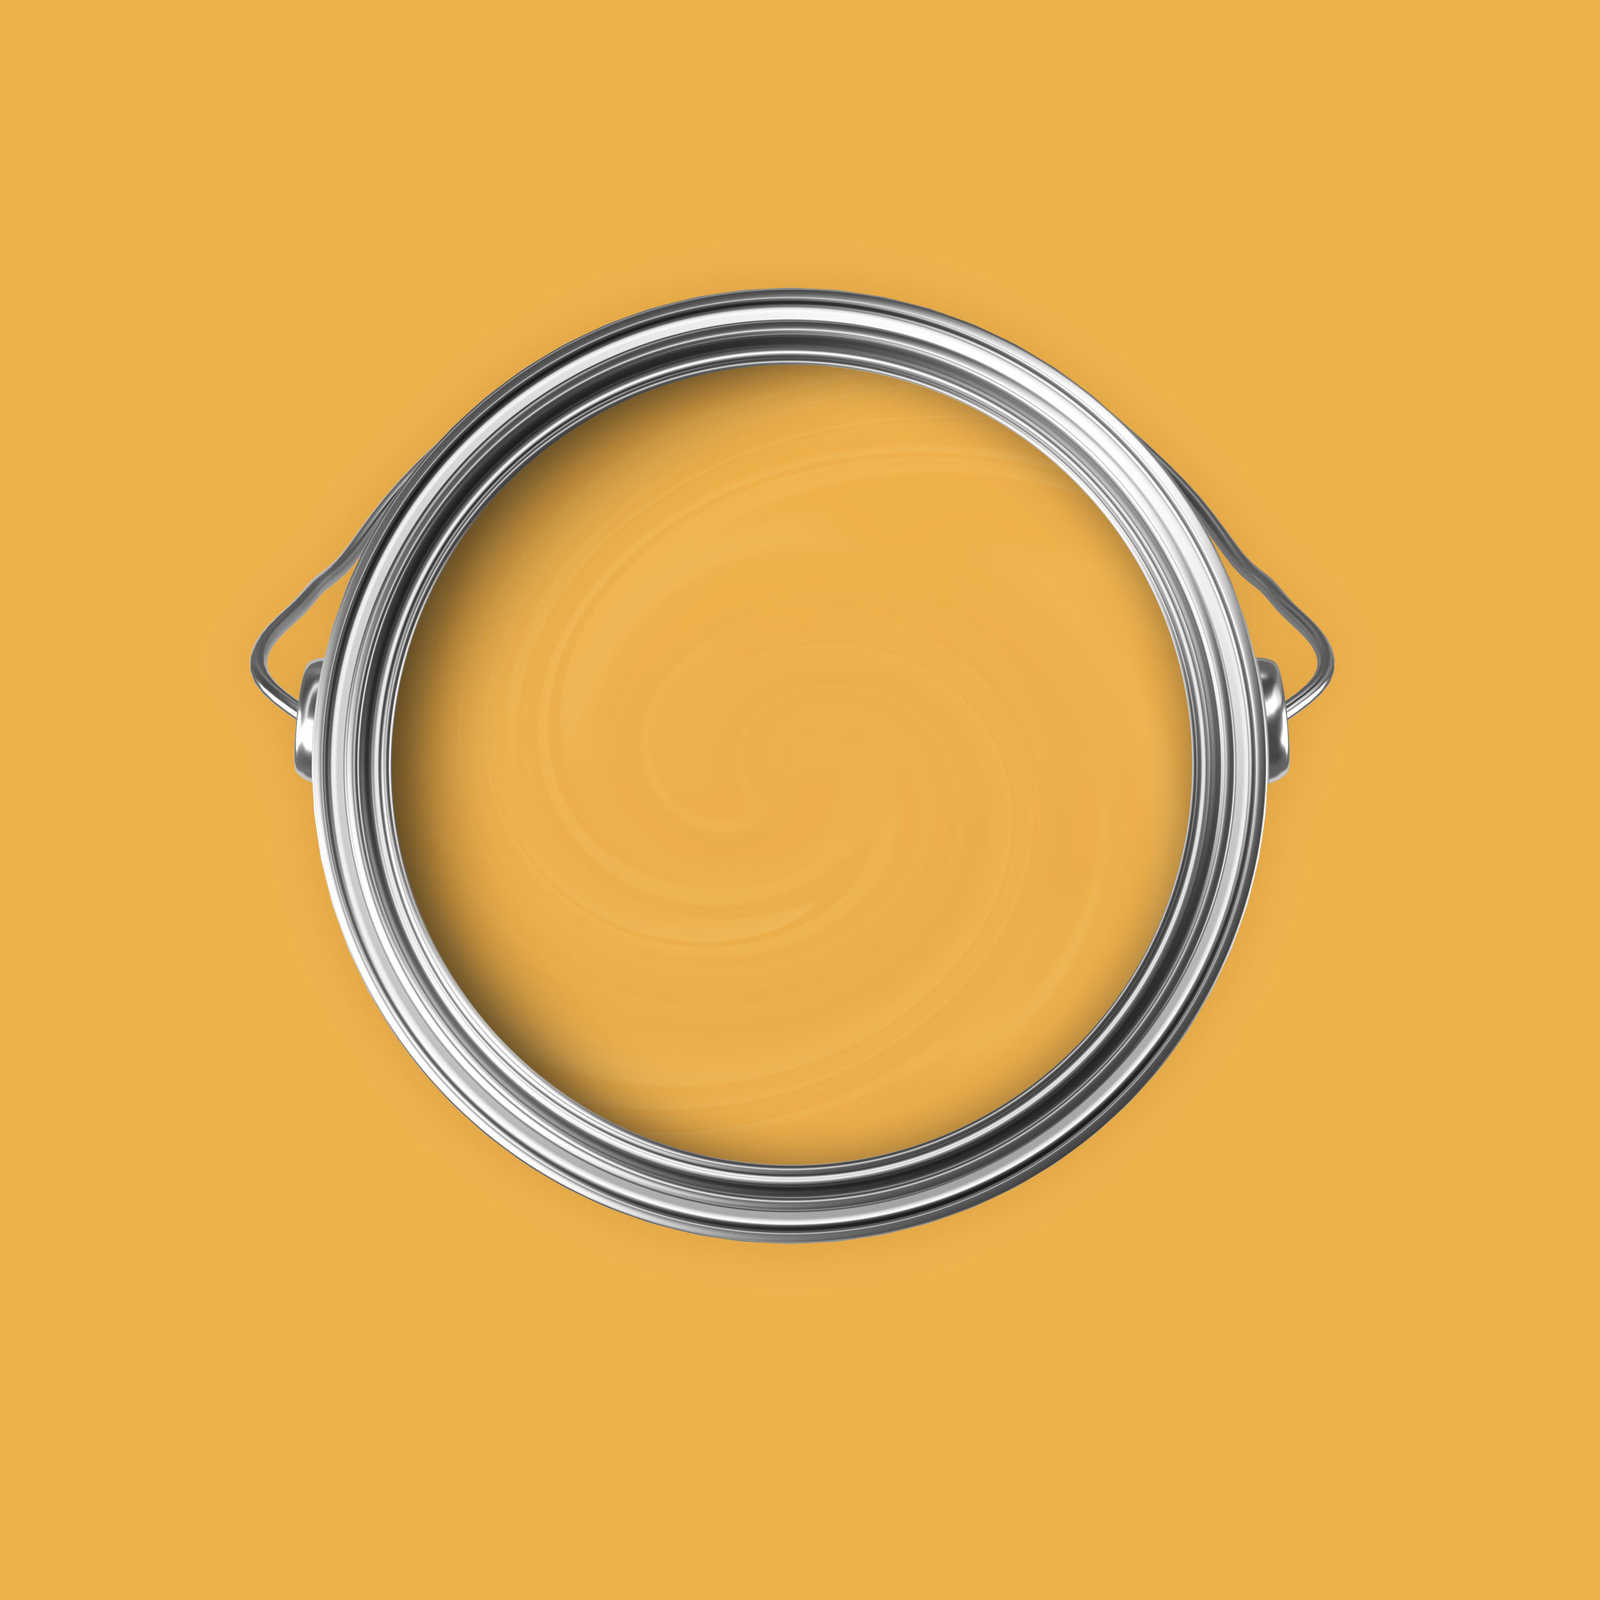             Premium Muurverf sterk saffraangeel »Juicy Yellow« NW806 – 5 liter
        